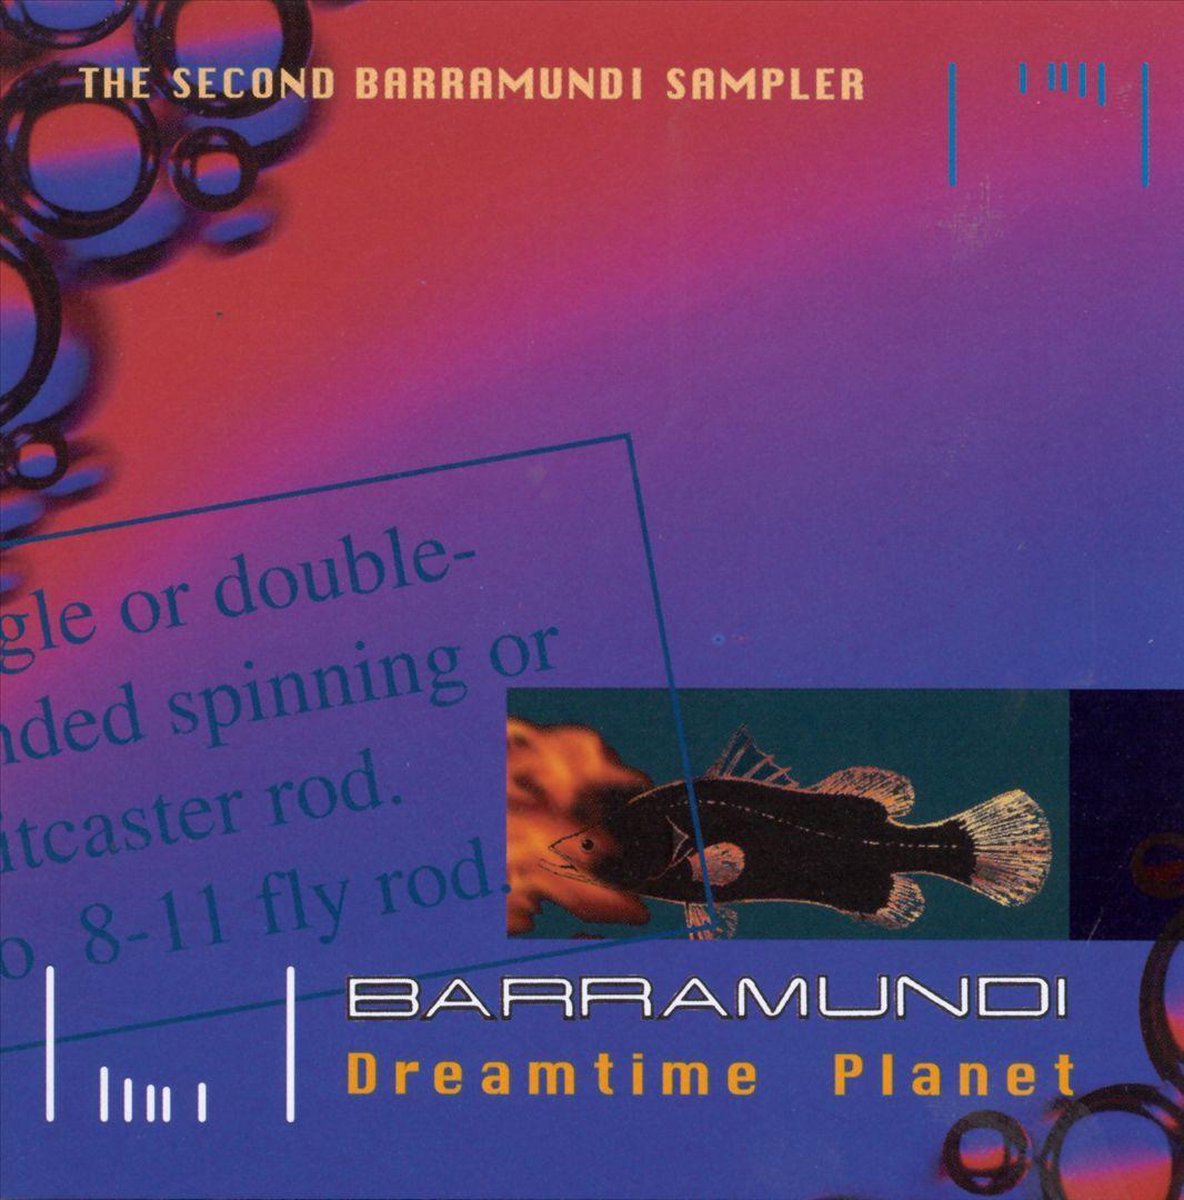 Dreamtime Planet: The Second Barramundi Sampler - various artists